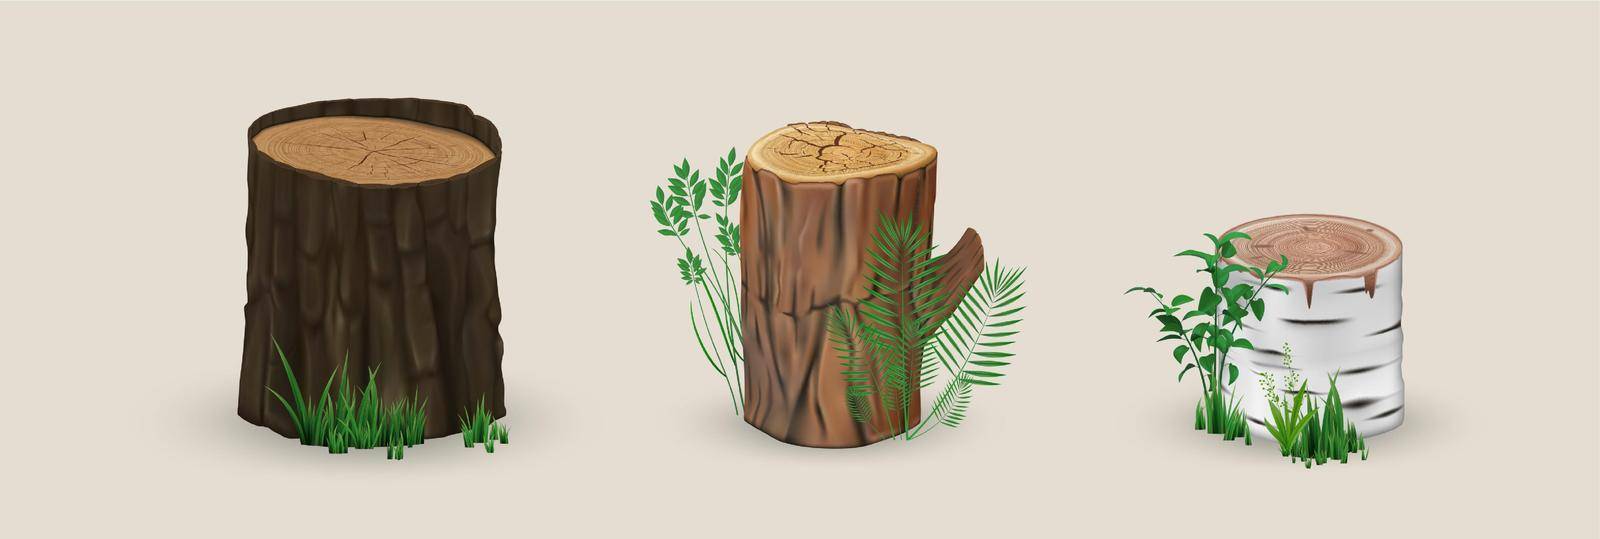 Realistic wood stumps mockup by Vasilyeu